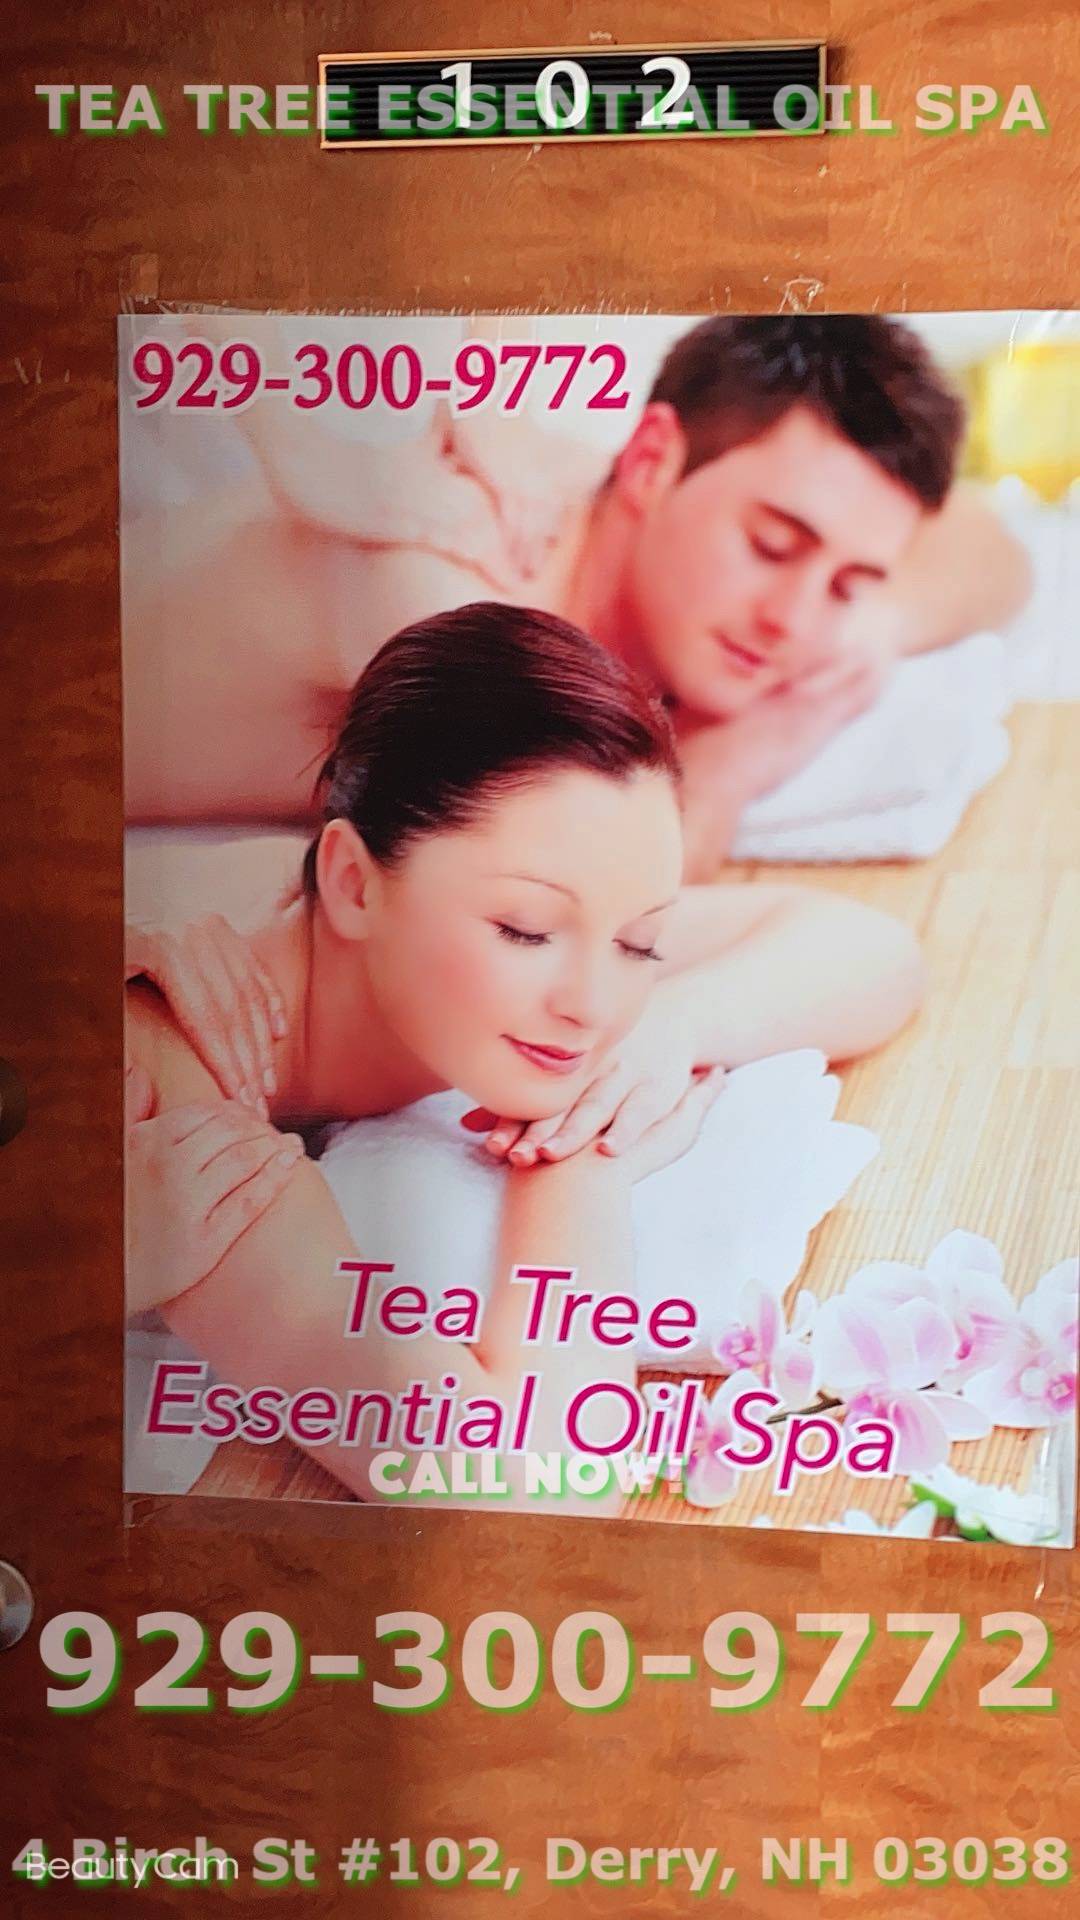 Tea Tree Essential Oil Spa | 4 Birch St Unit 102, Derry, NH 03038, United States | Phone: (929) 300-9772